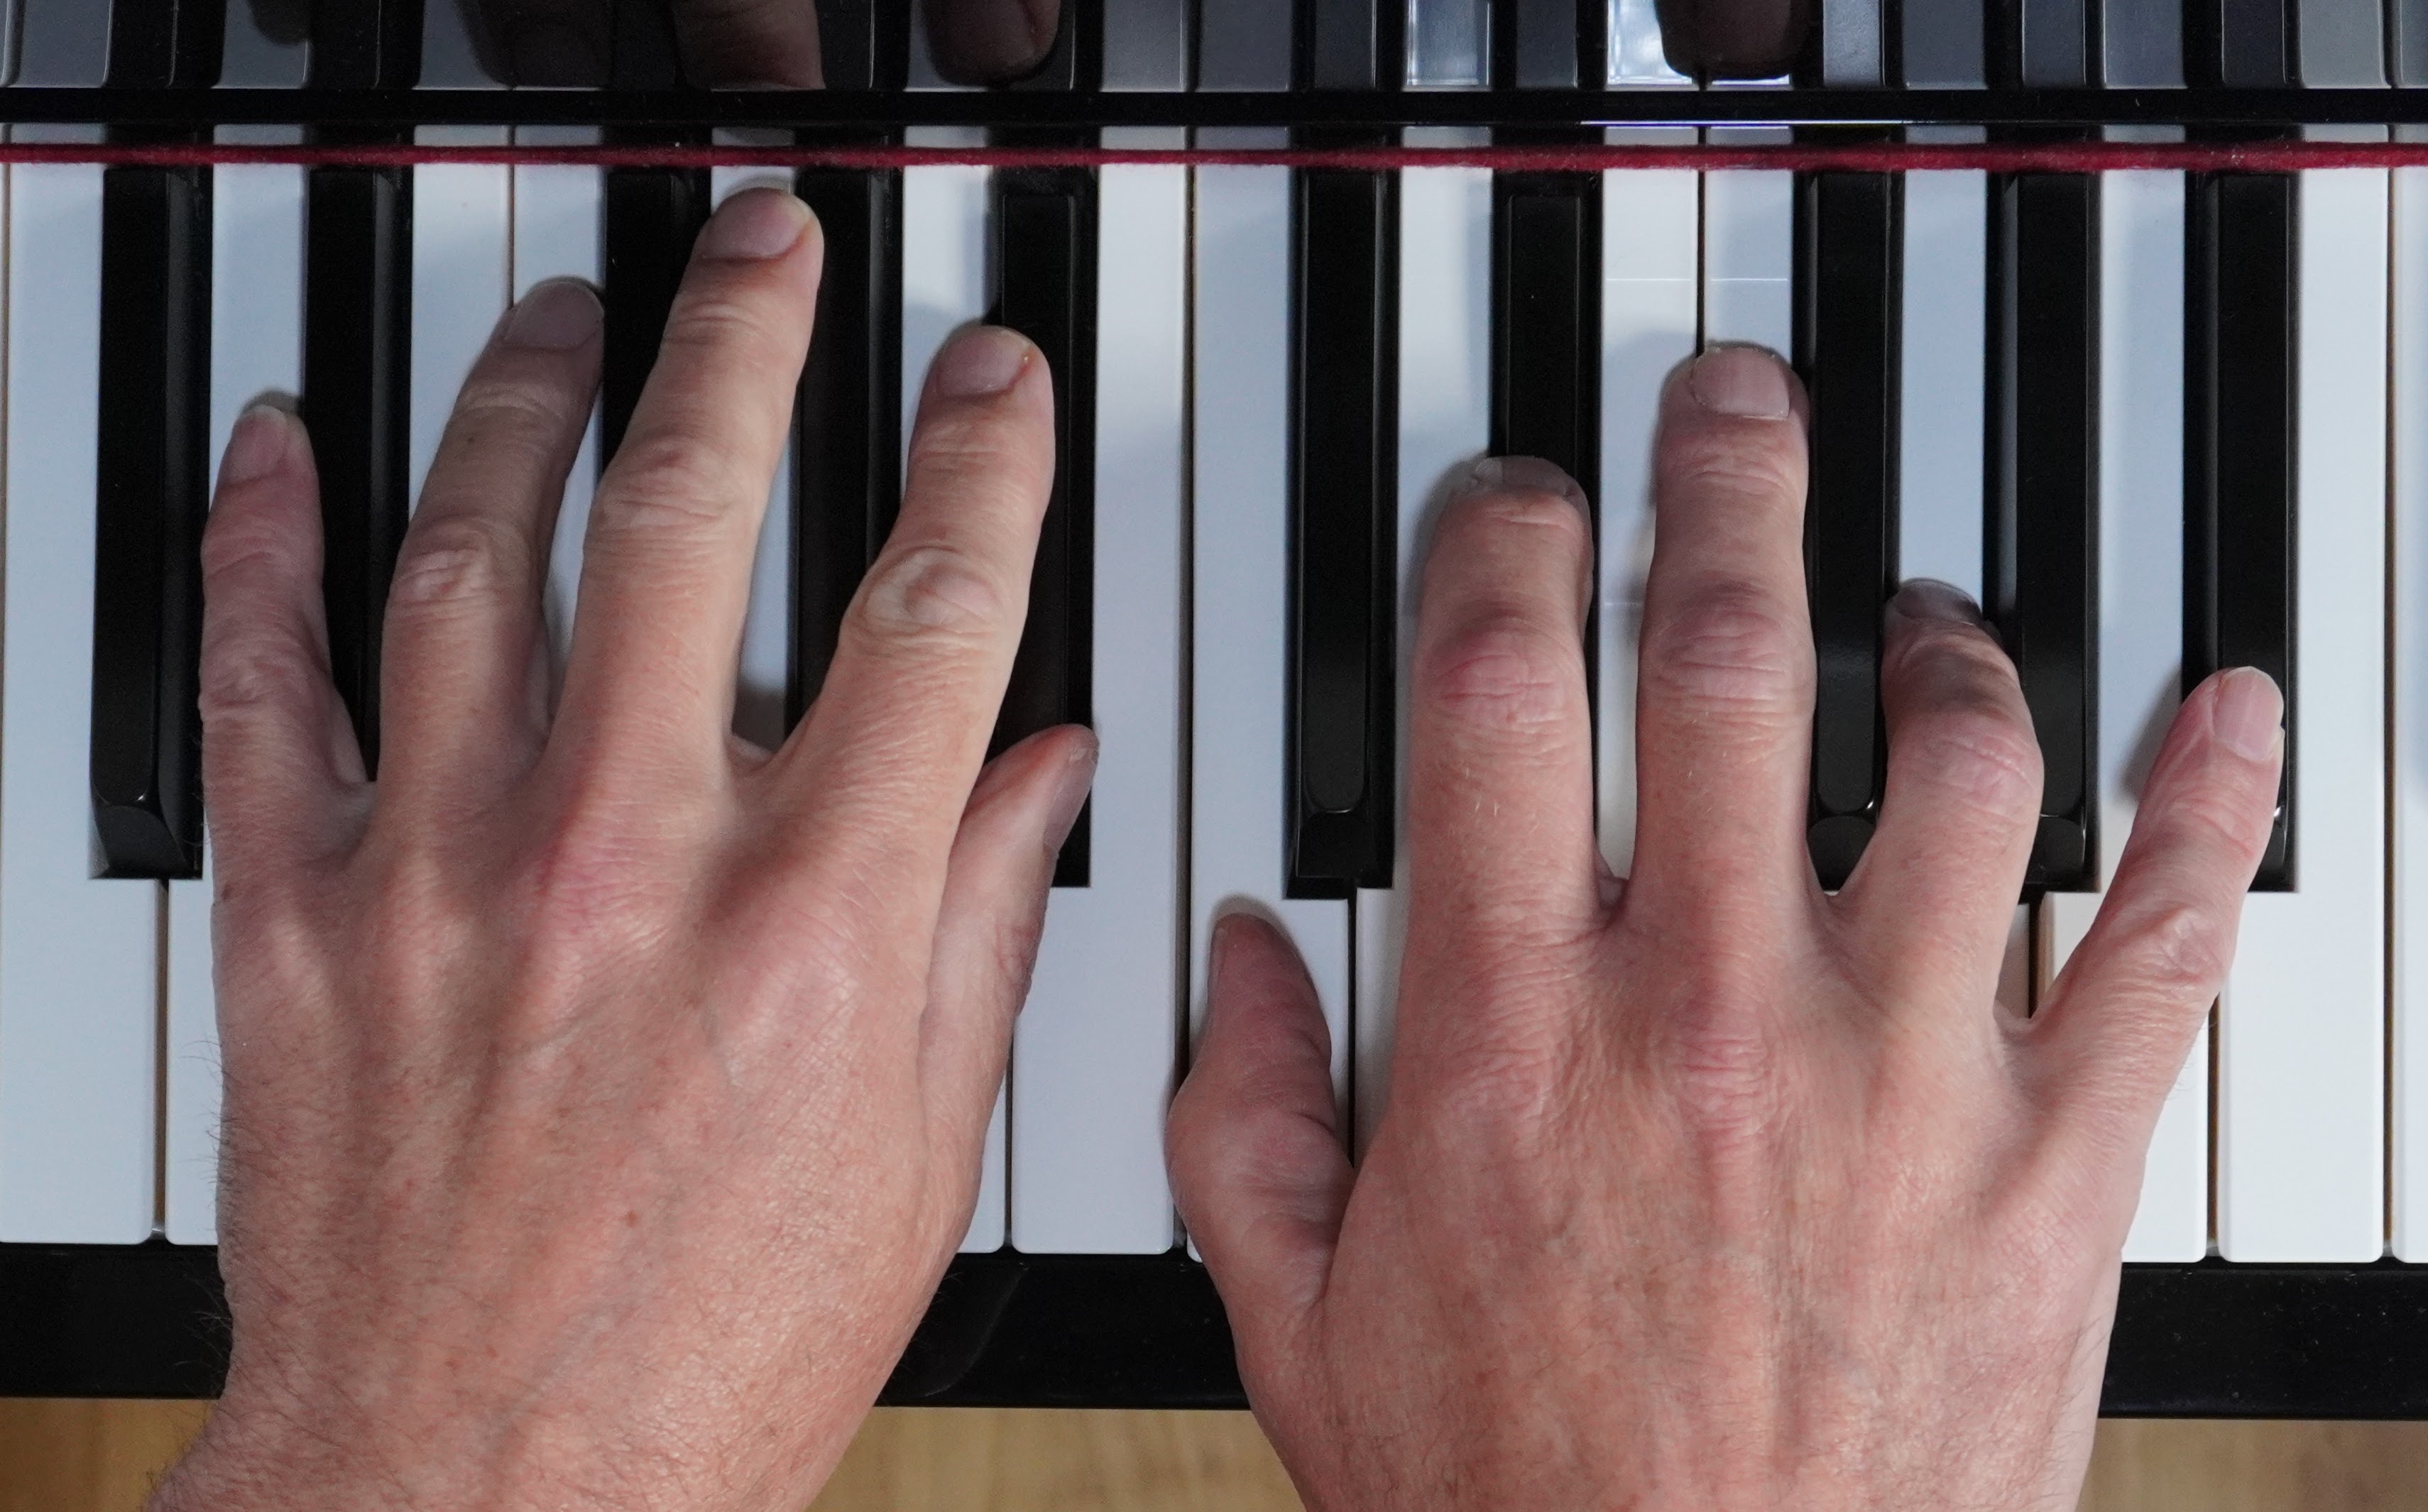 Julians hands resting on a piano keyboard